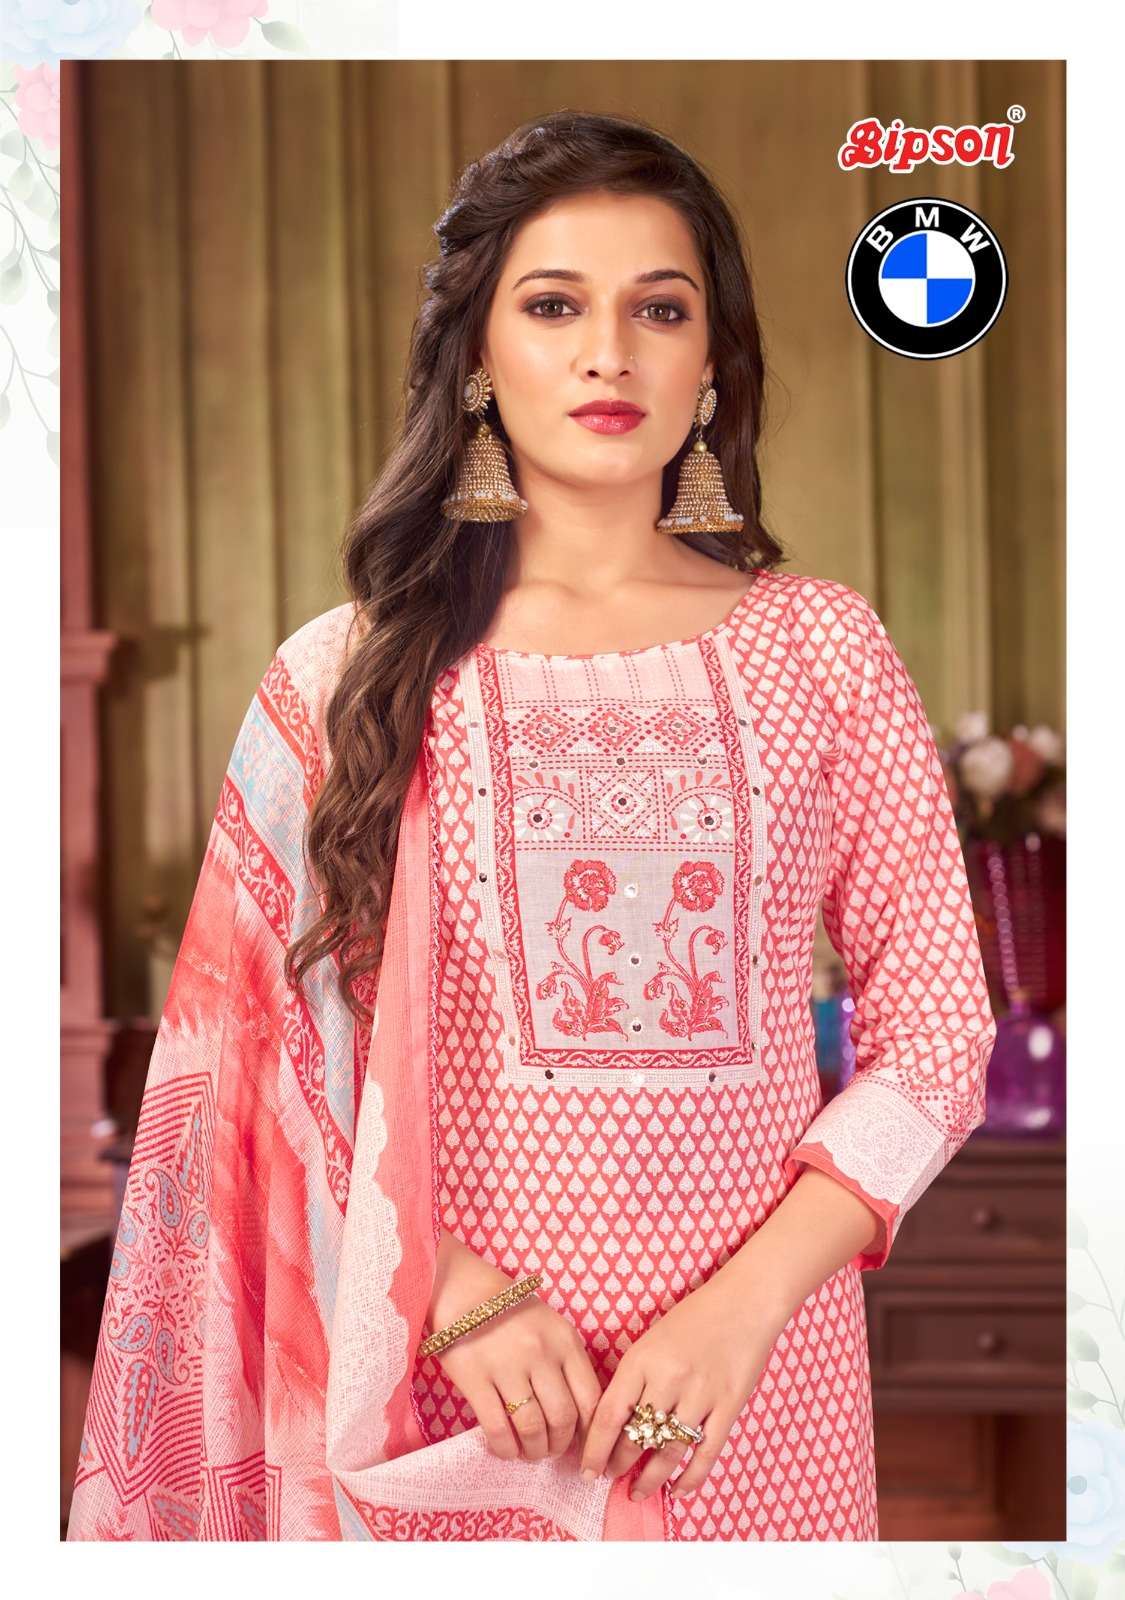 bipson bmw 2249 colours designer fancy party wear salwar kameez wholesaler surat gujarat